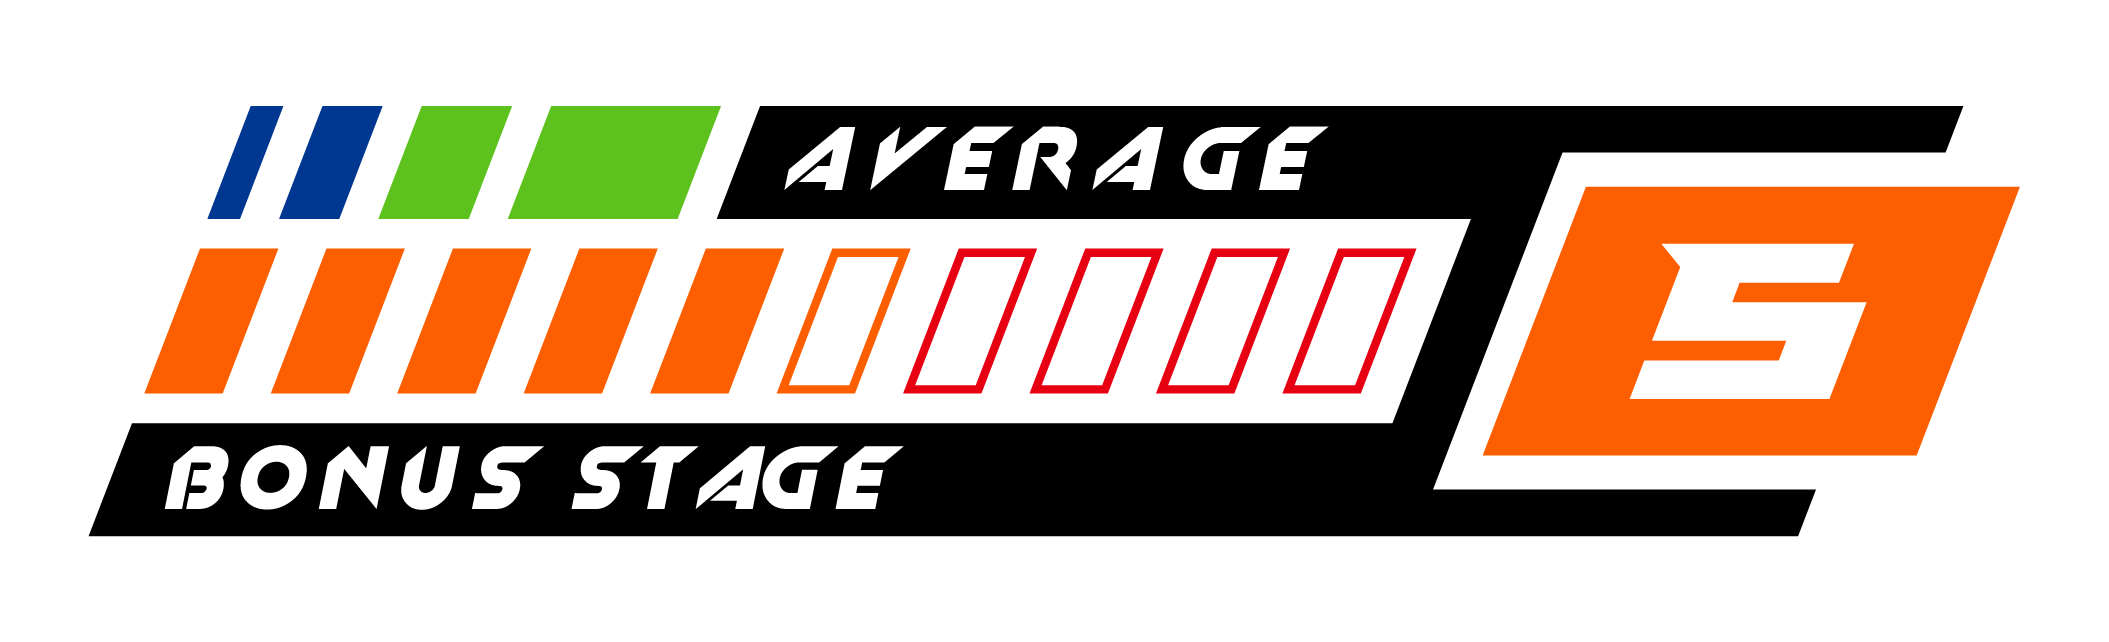 Bonus Stage Rating - Average 5/10